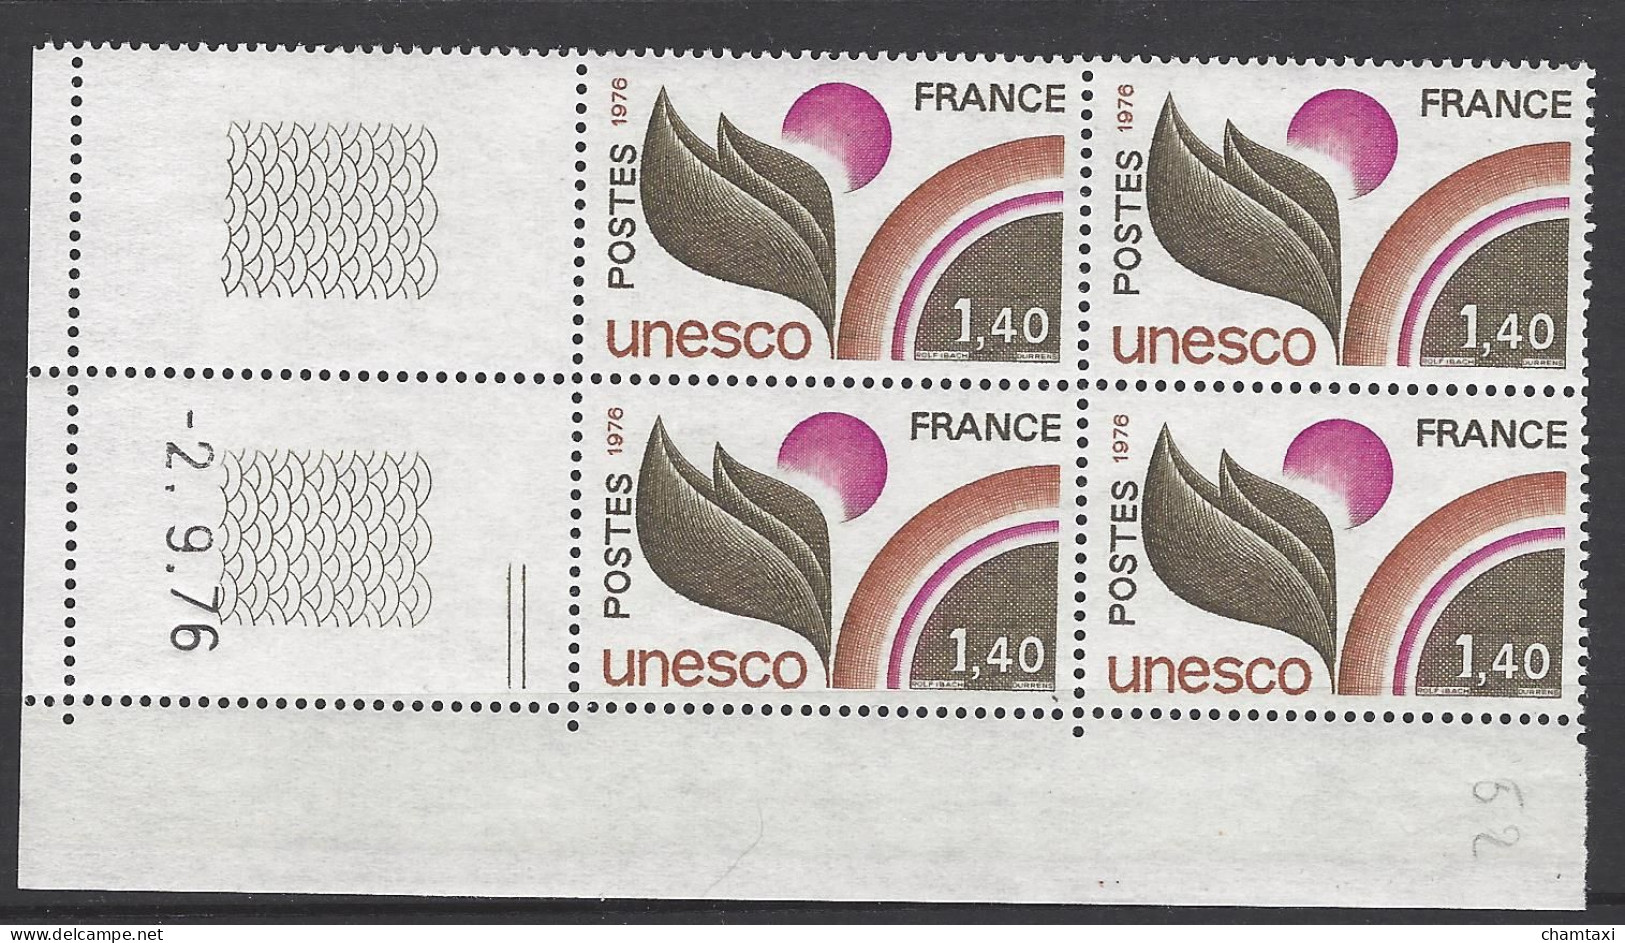 CD 52 FRANCE 1976 TIMBRE SERVICE UNESCO COIN DATE 52 : 2 / 9 / 76 - Officials